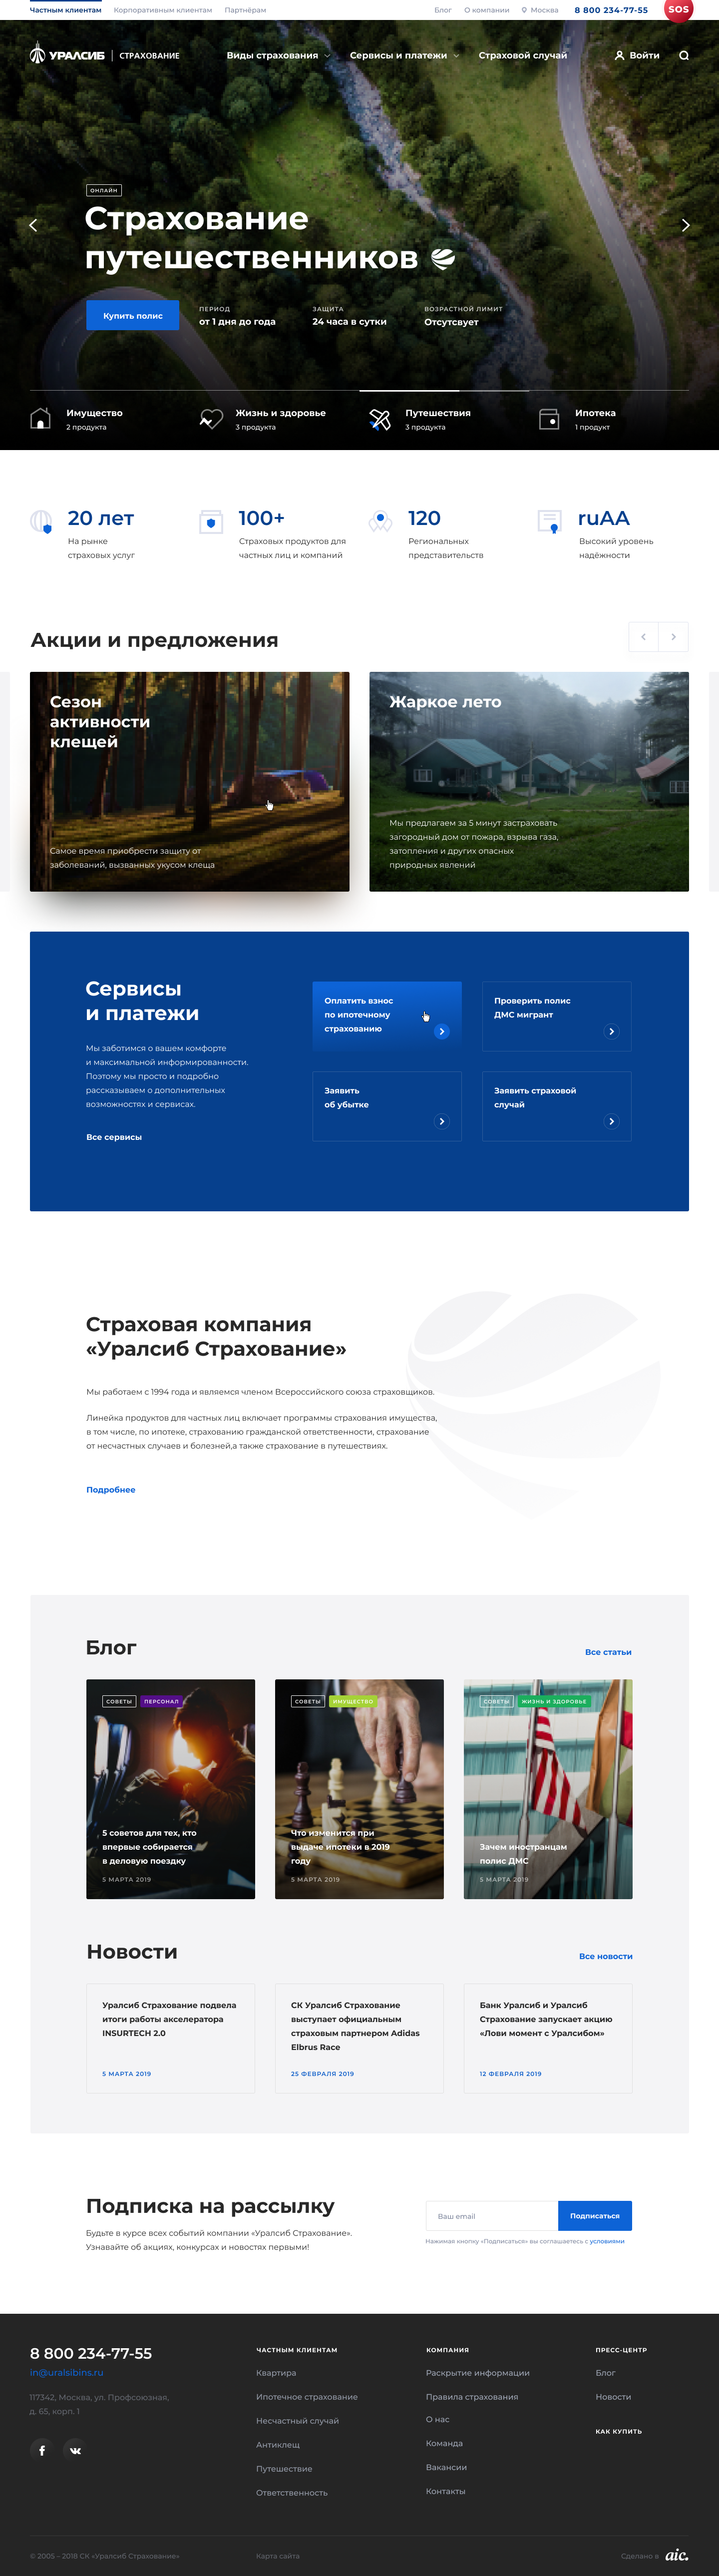 Уралсиб Страхование: редизайн сайта и верстка на React